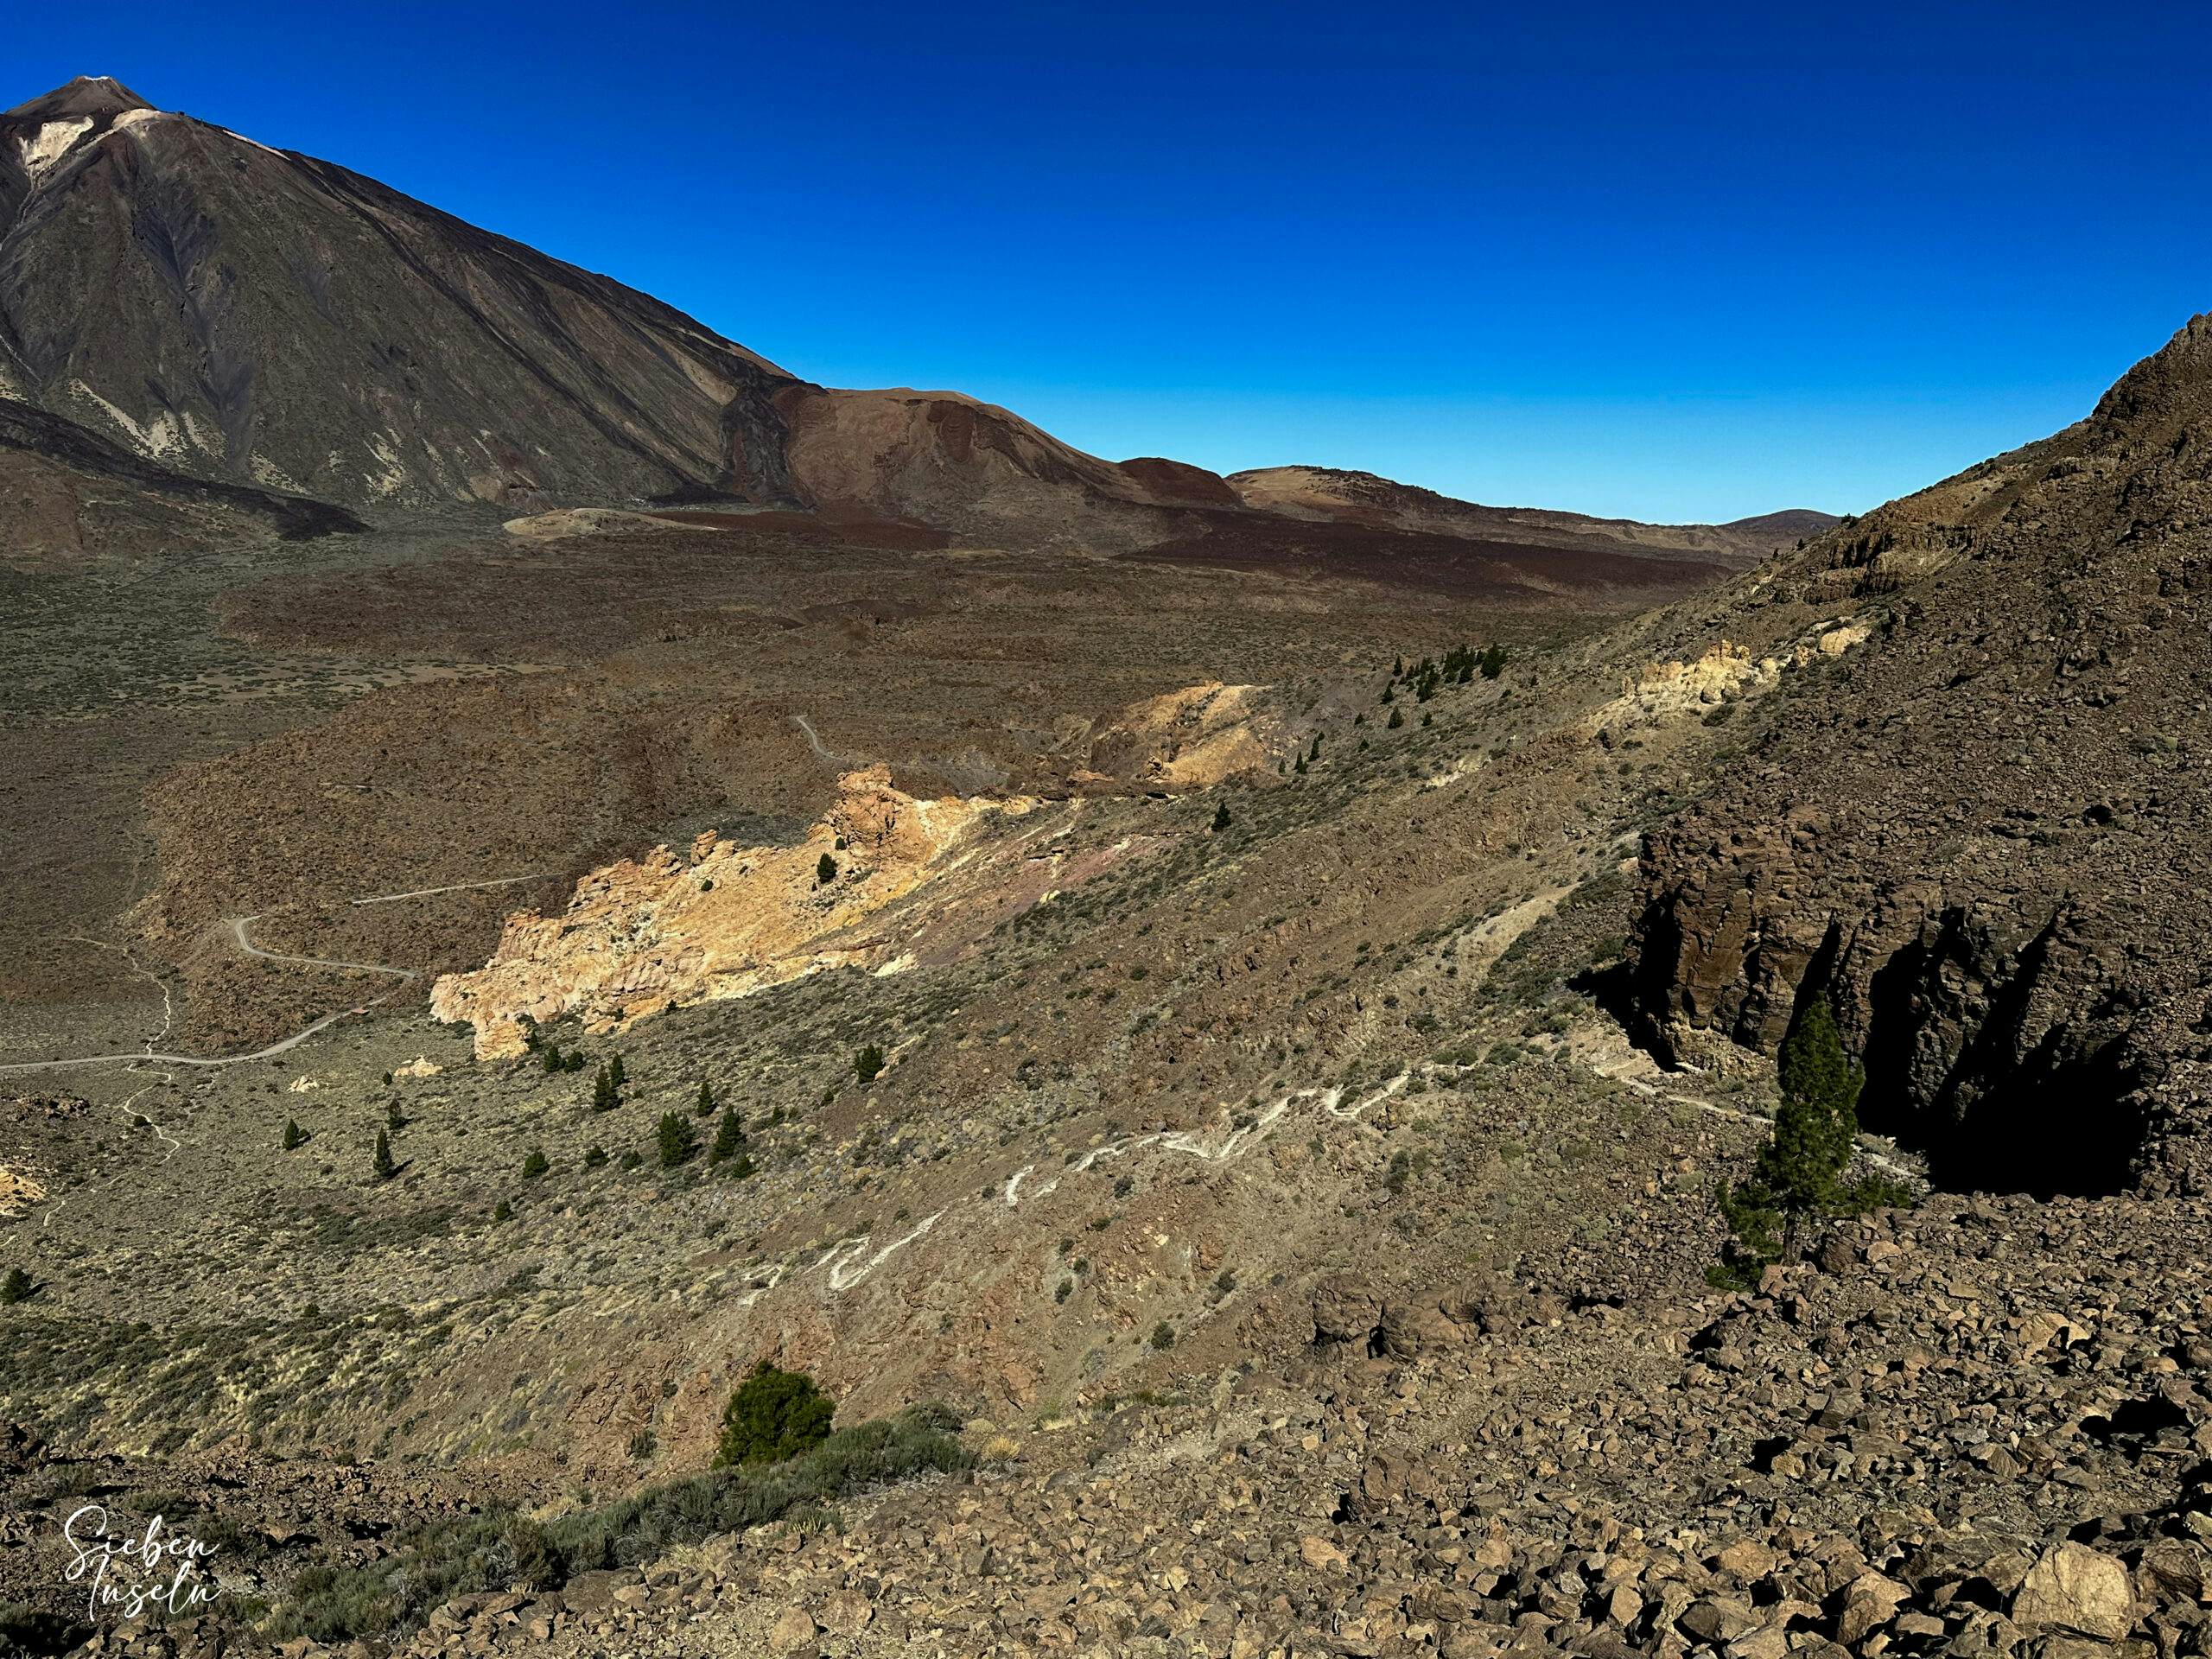 View from the ascent path over the Caldera de las Cañadas to Teide